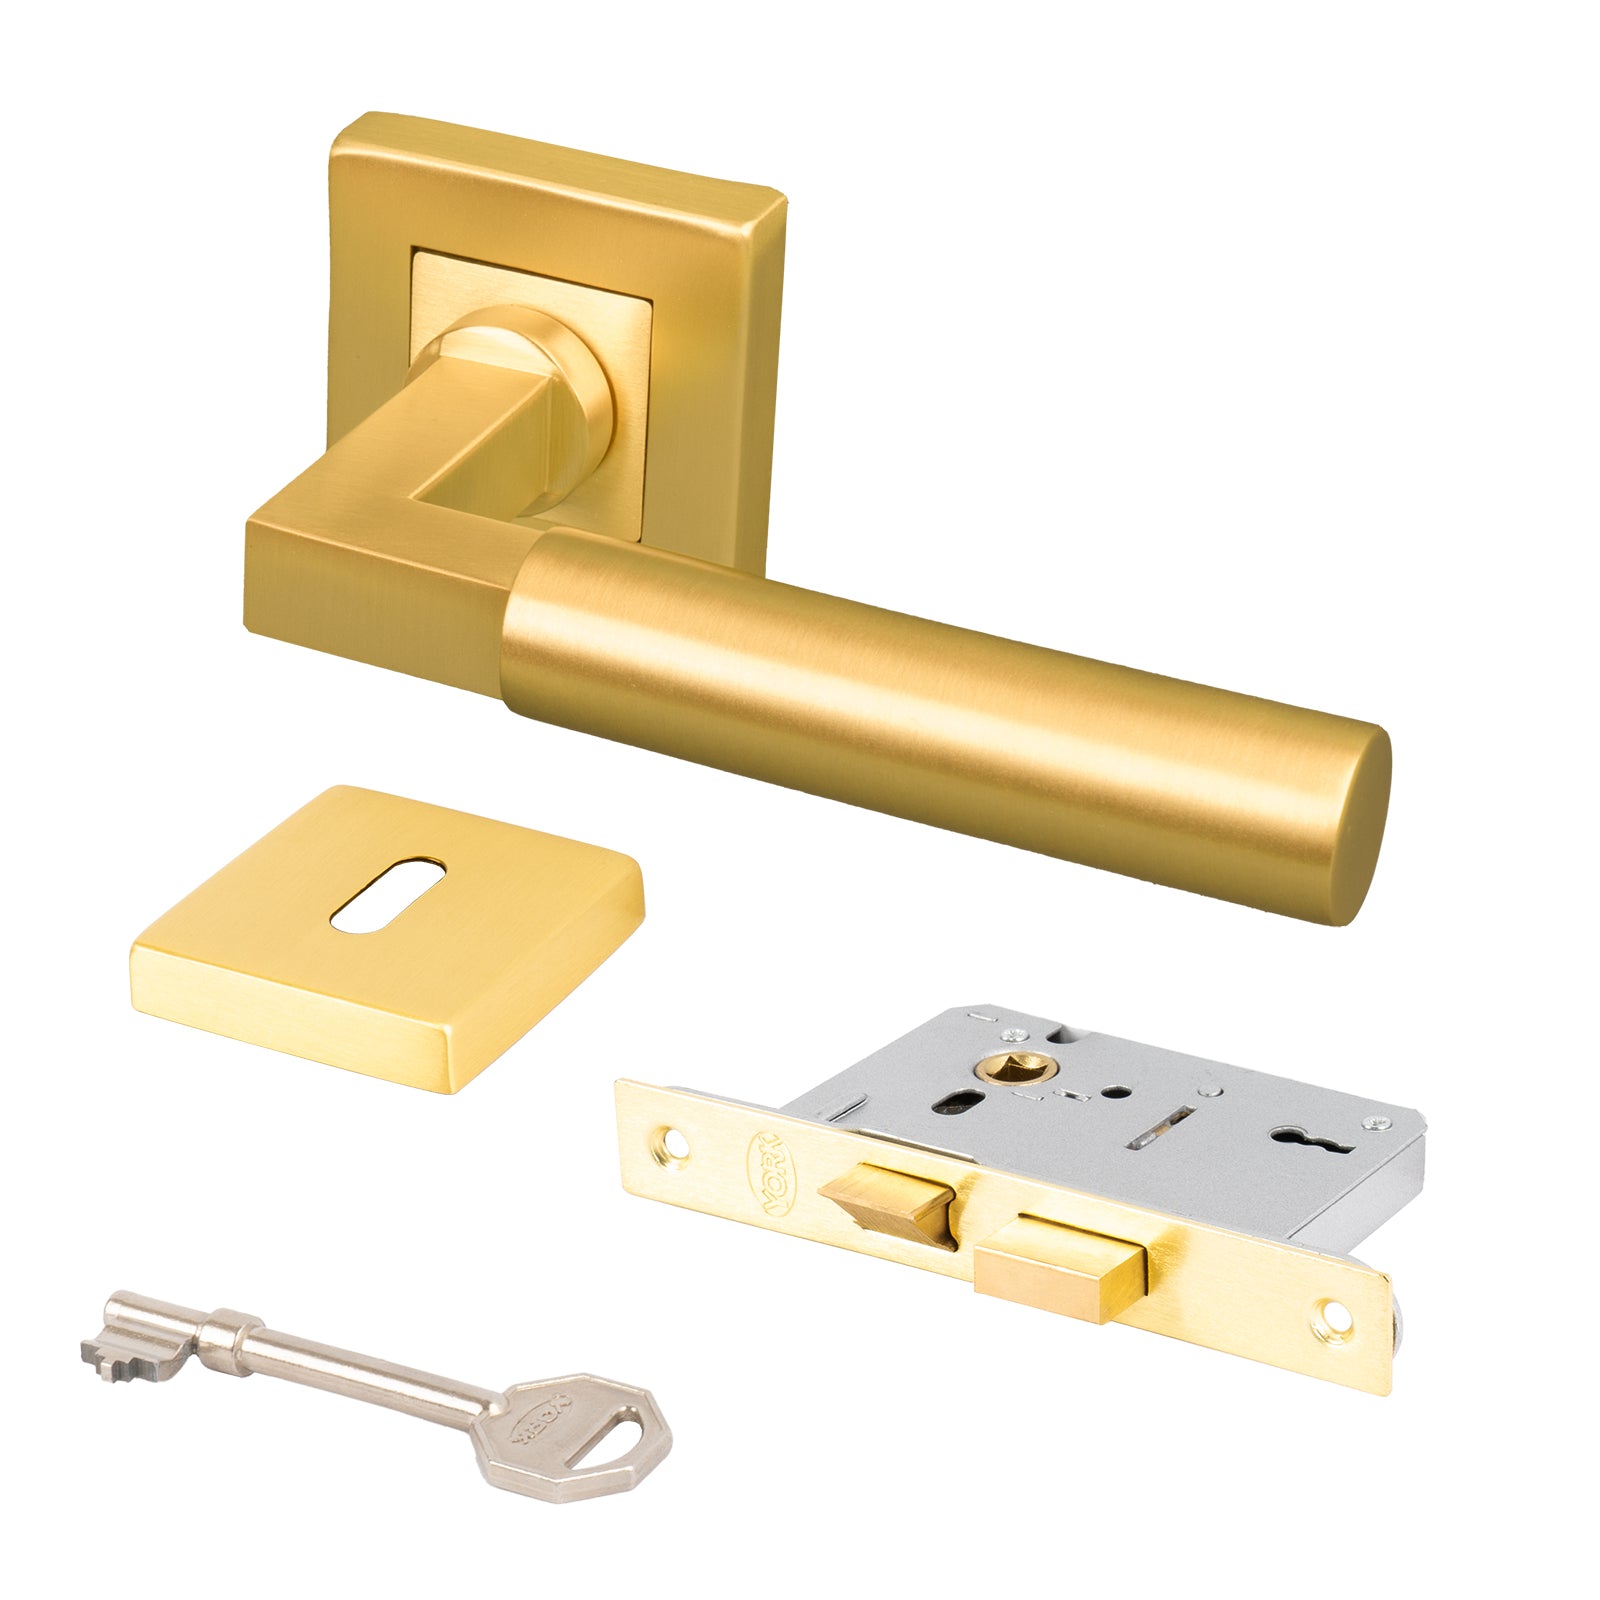 satin brass Bauhaus handles internal door lock set with keyhole cover